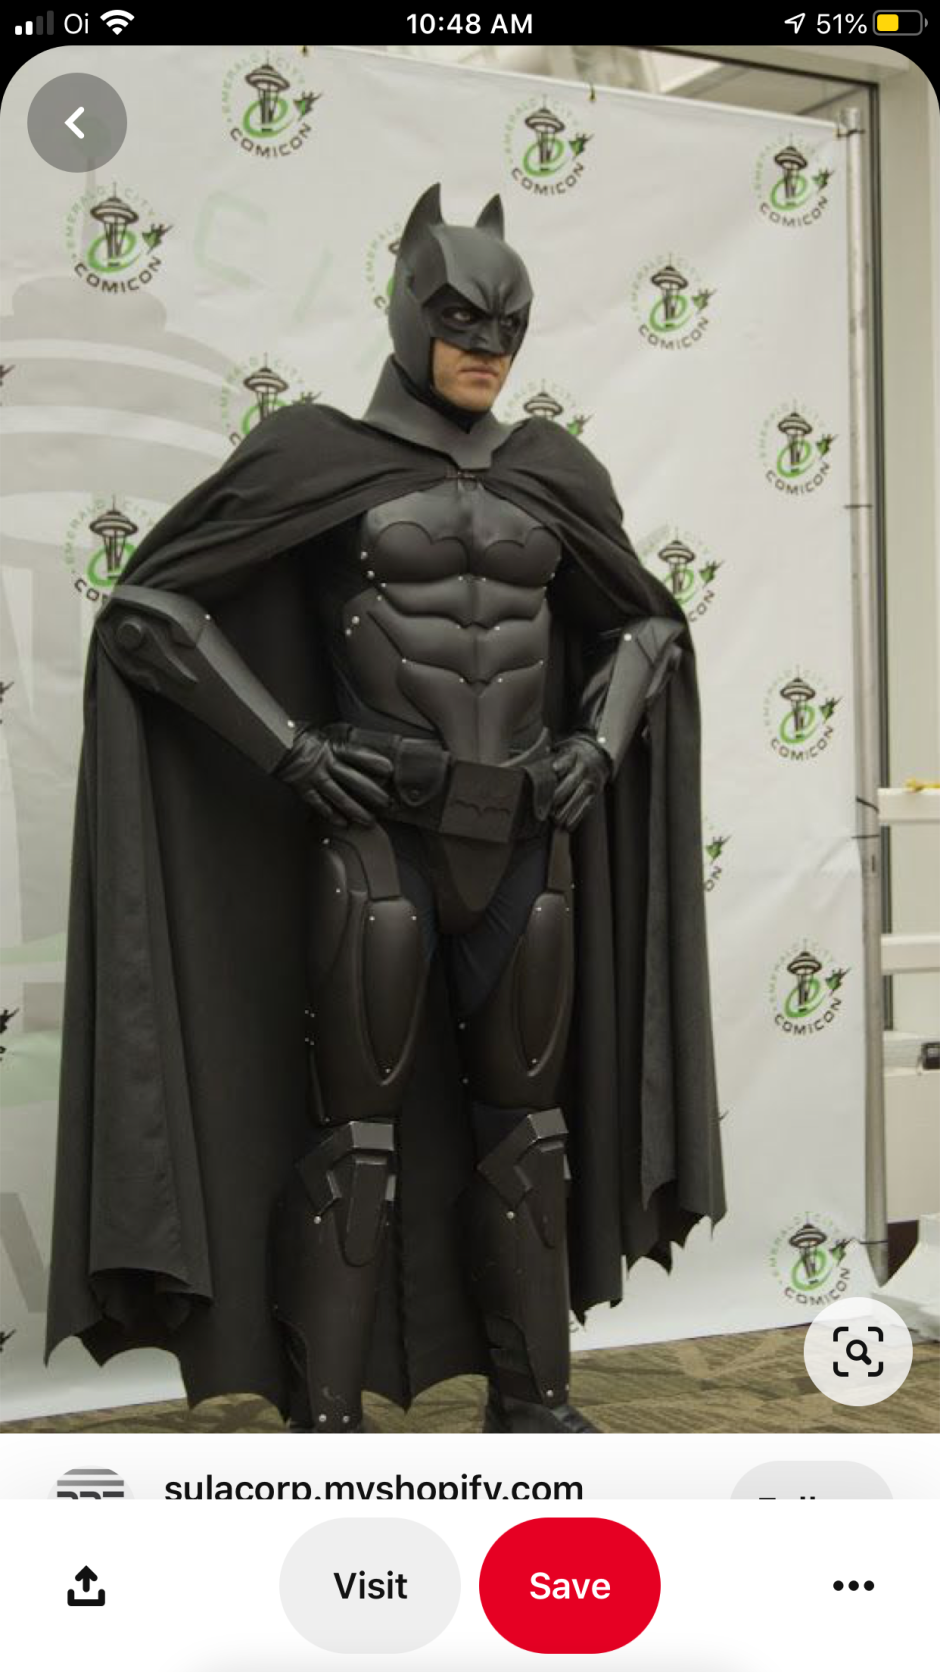 Детский костюм Бэтмена